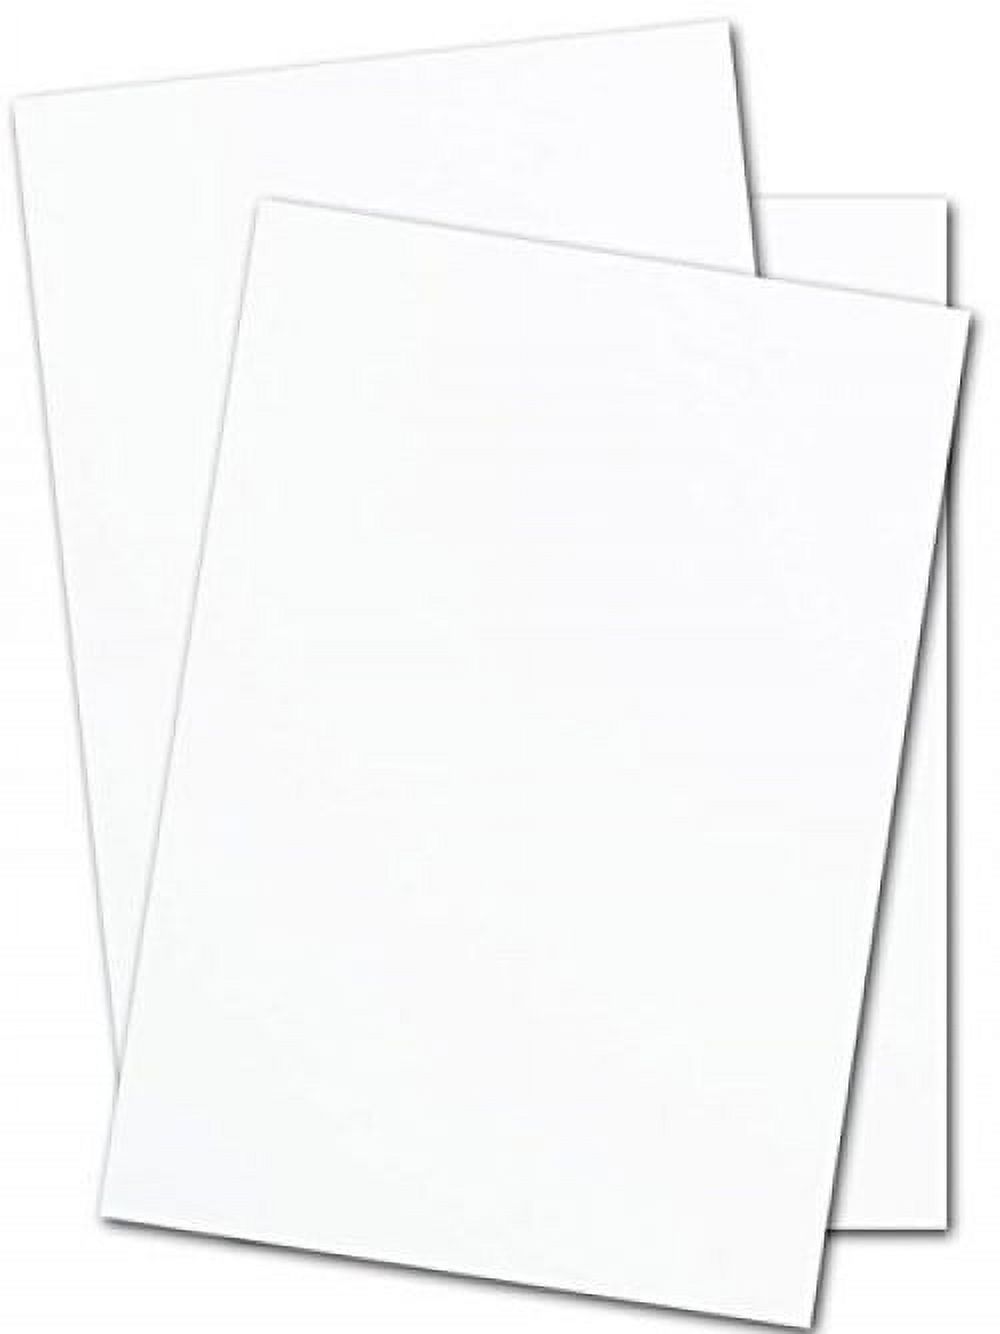 White Paper Structure